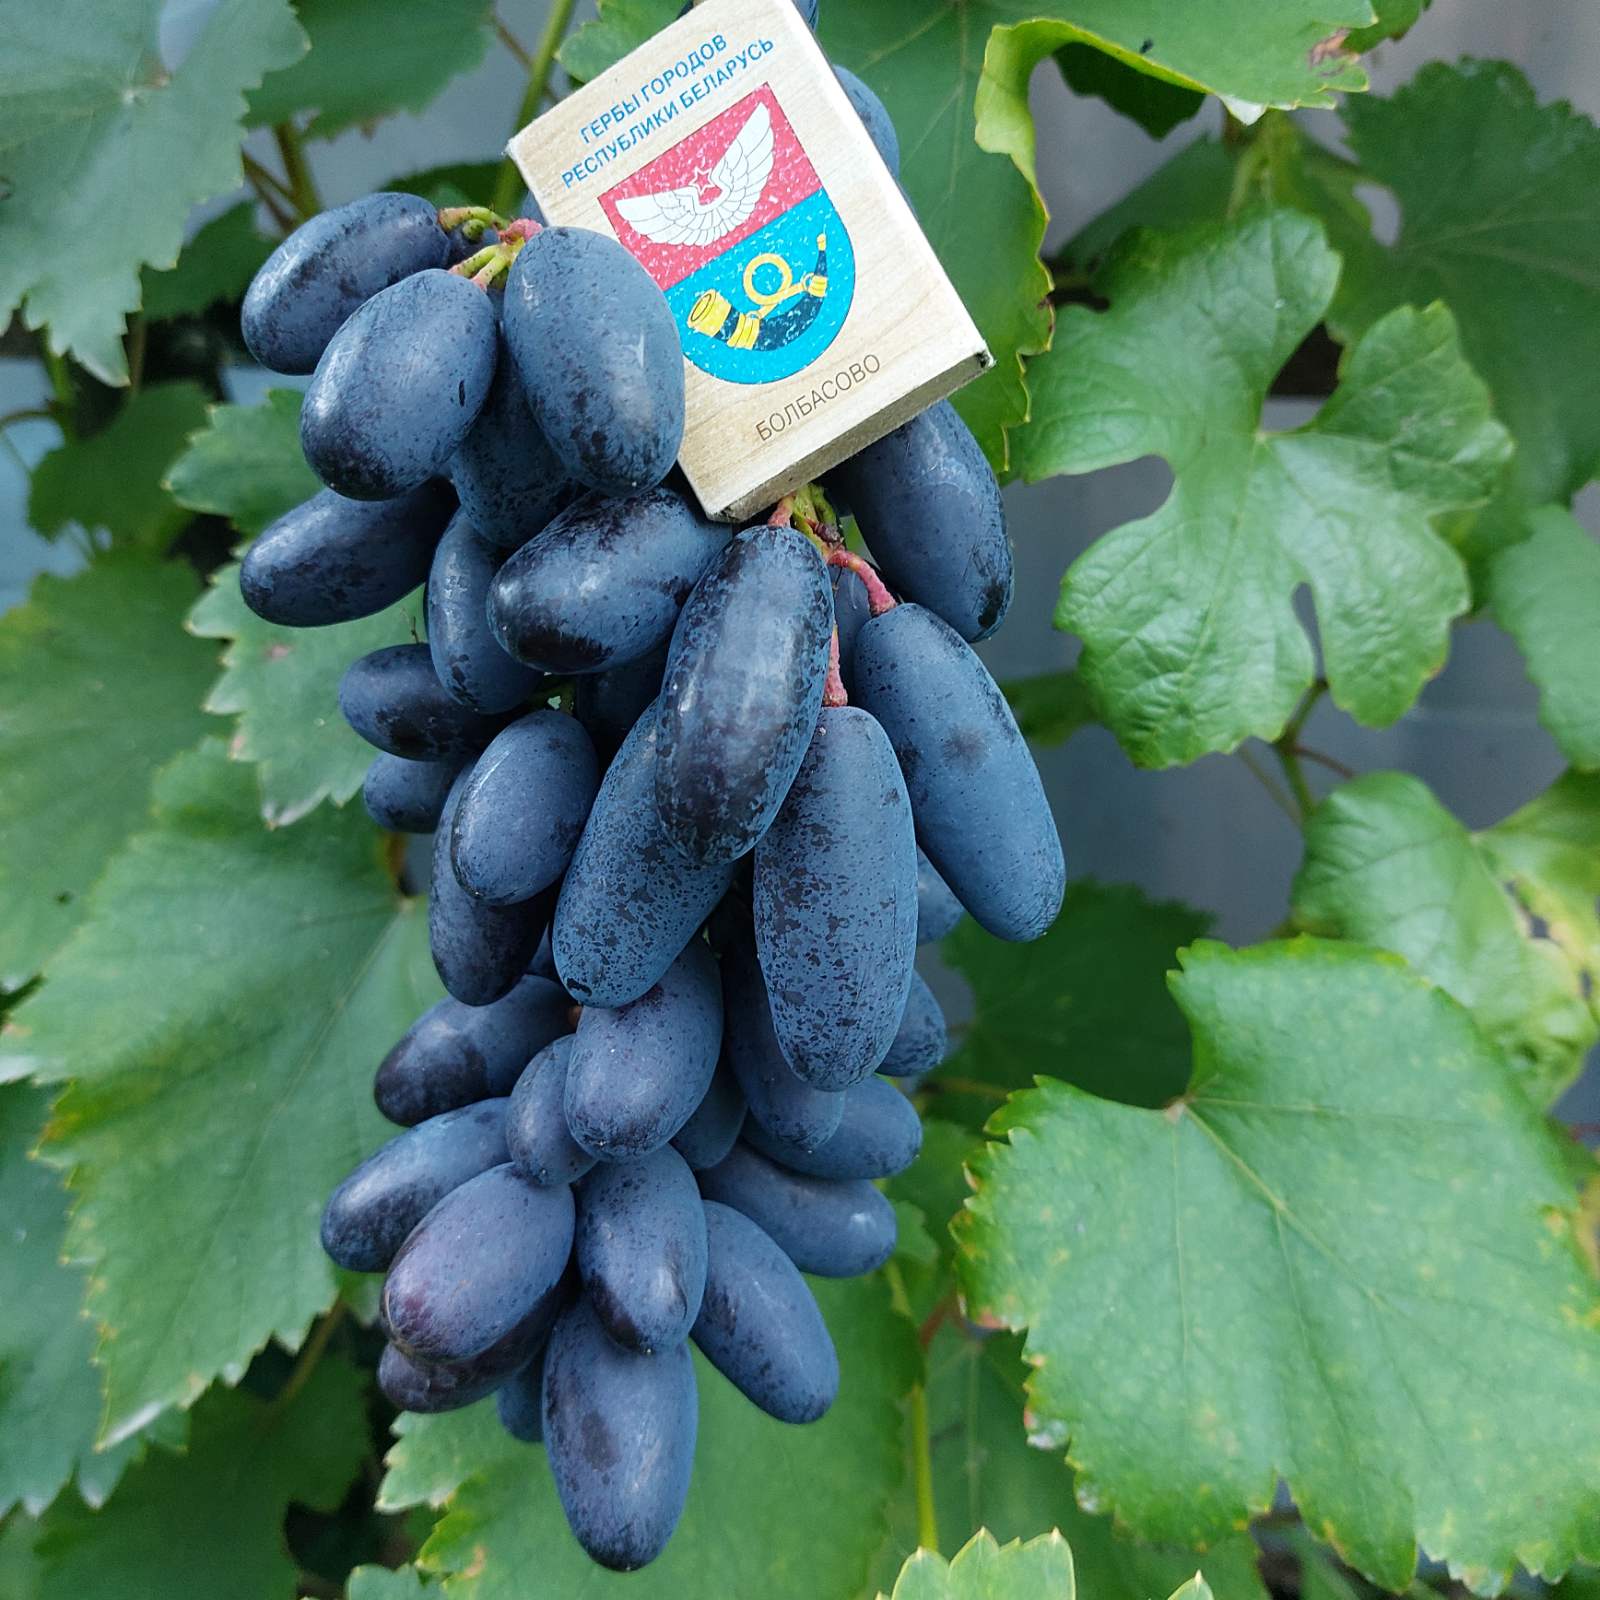 dneprovskiy suvinir vinograd